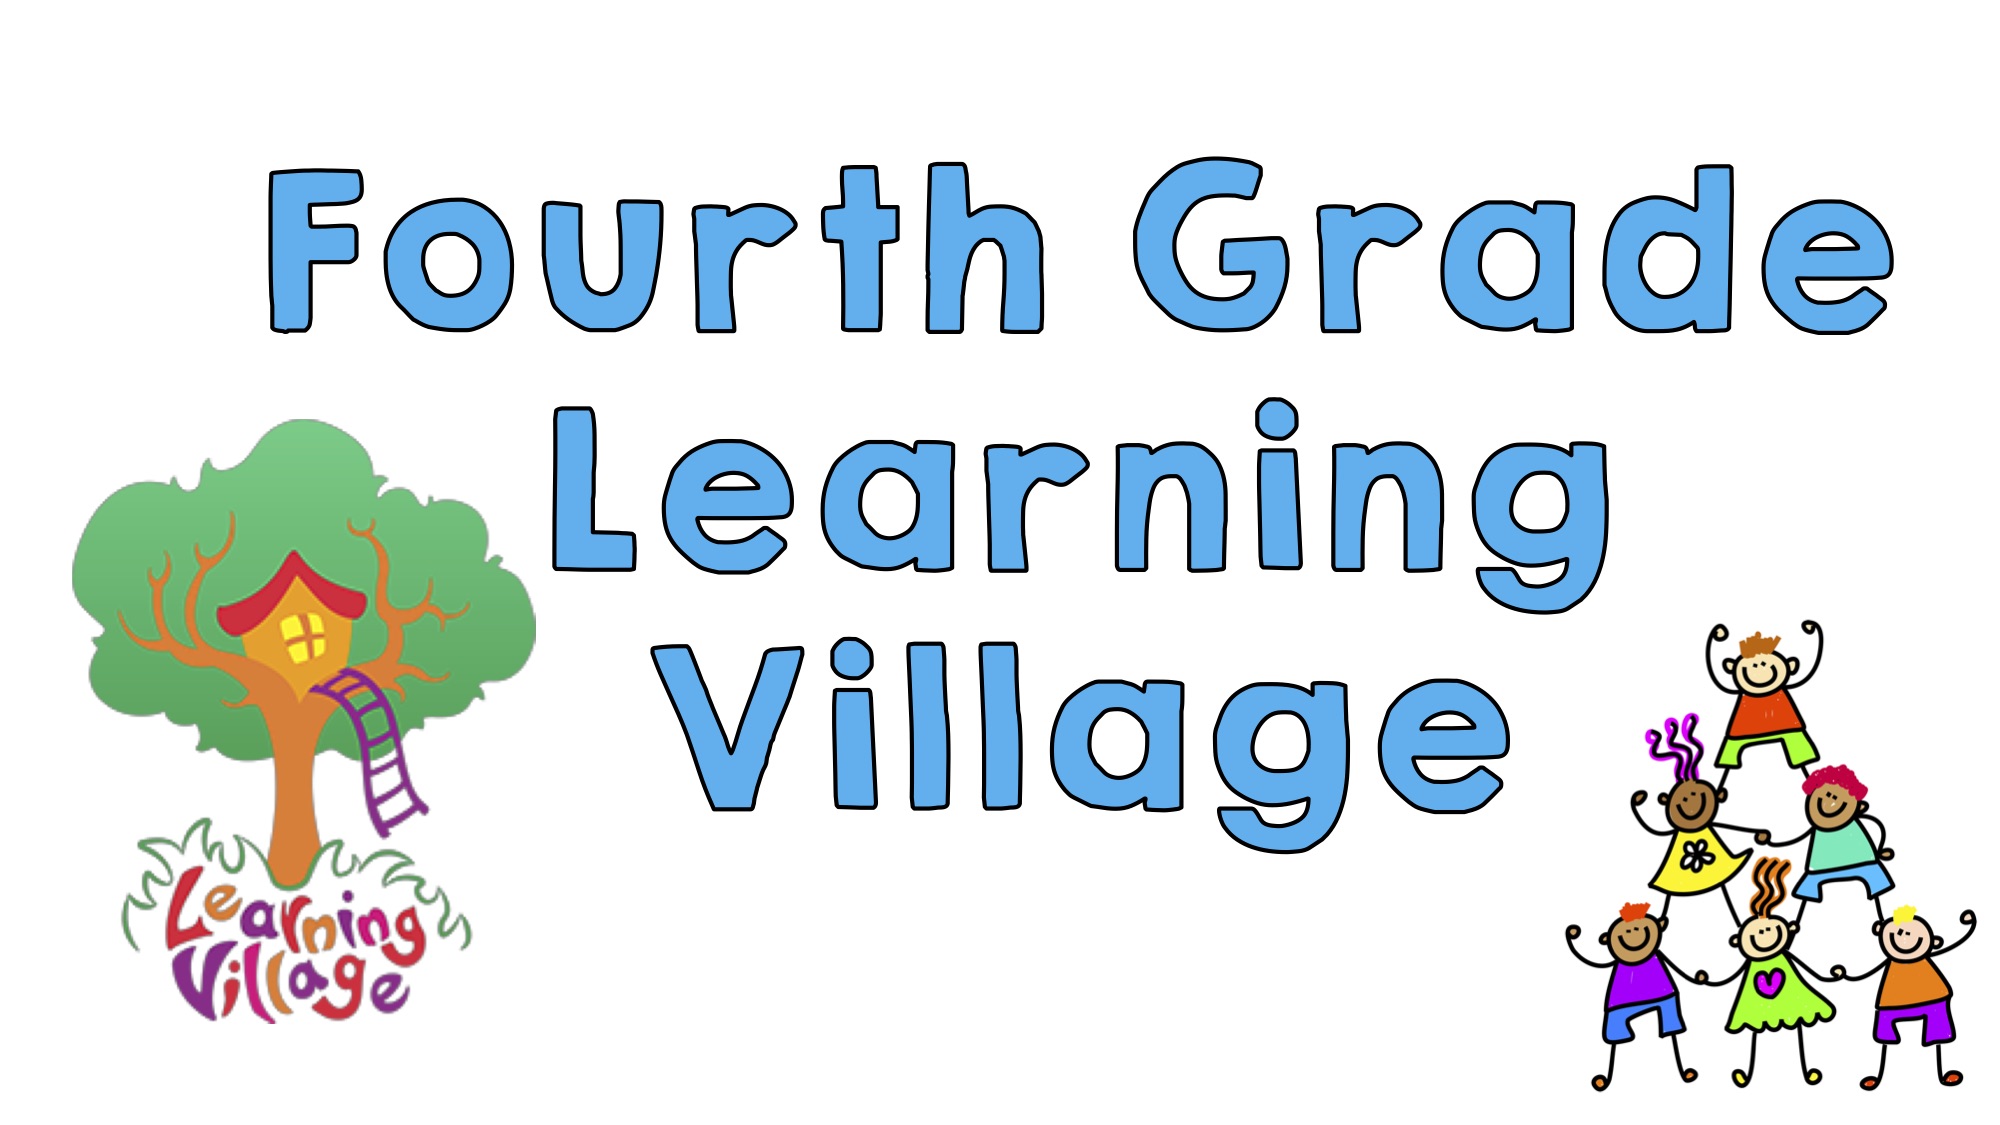 Fourth grade learning village